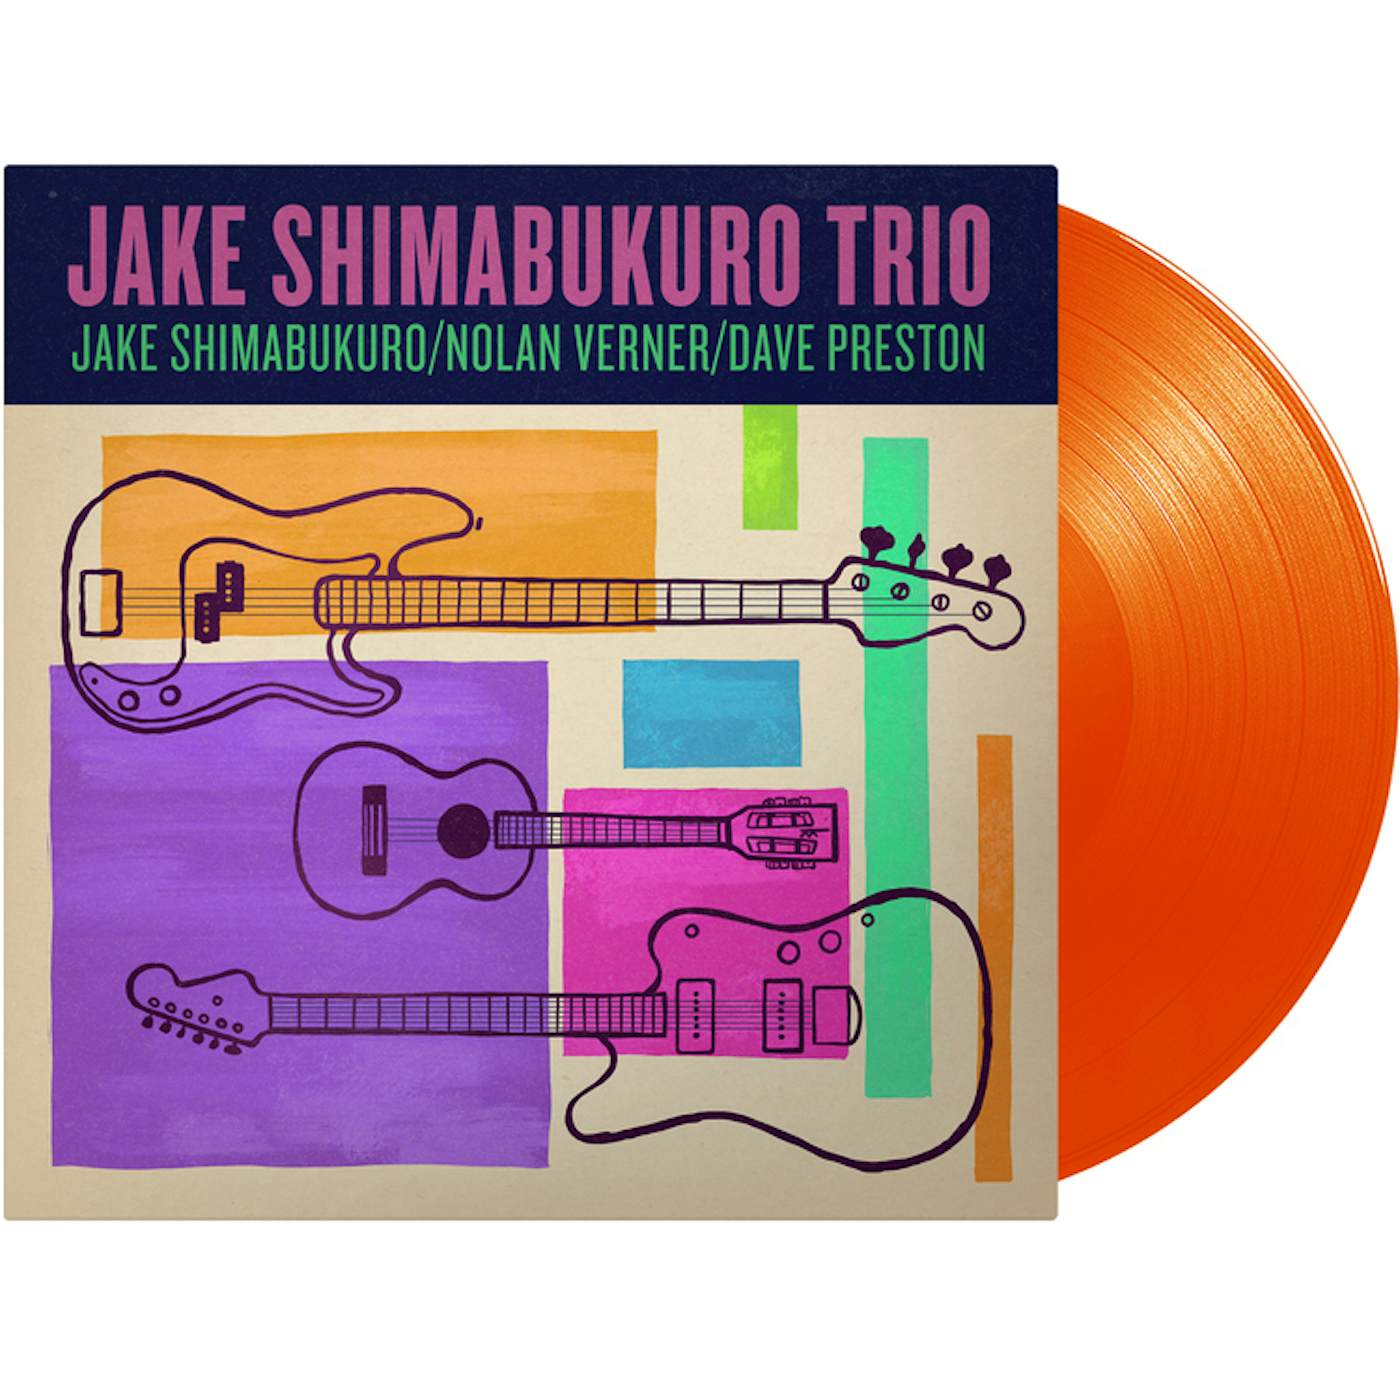 Jake Shimabukuro / Nolan Verner / Dave Preston TRIO Vinyl Record